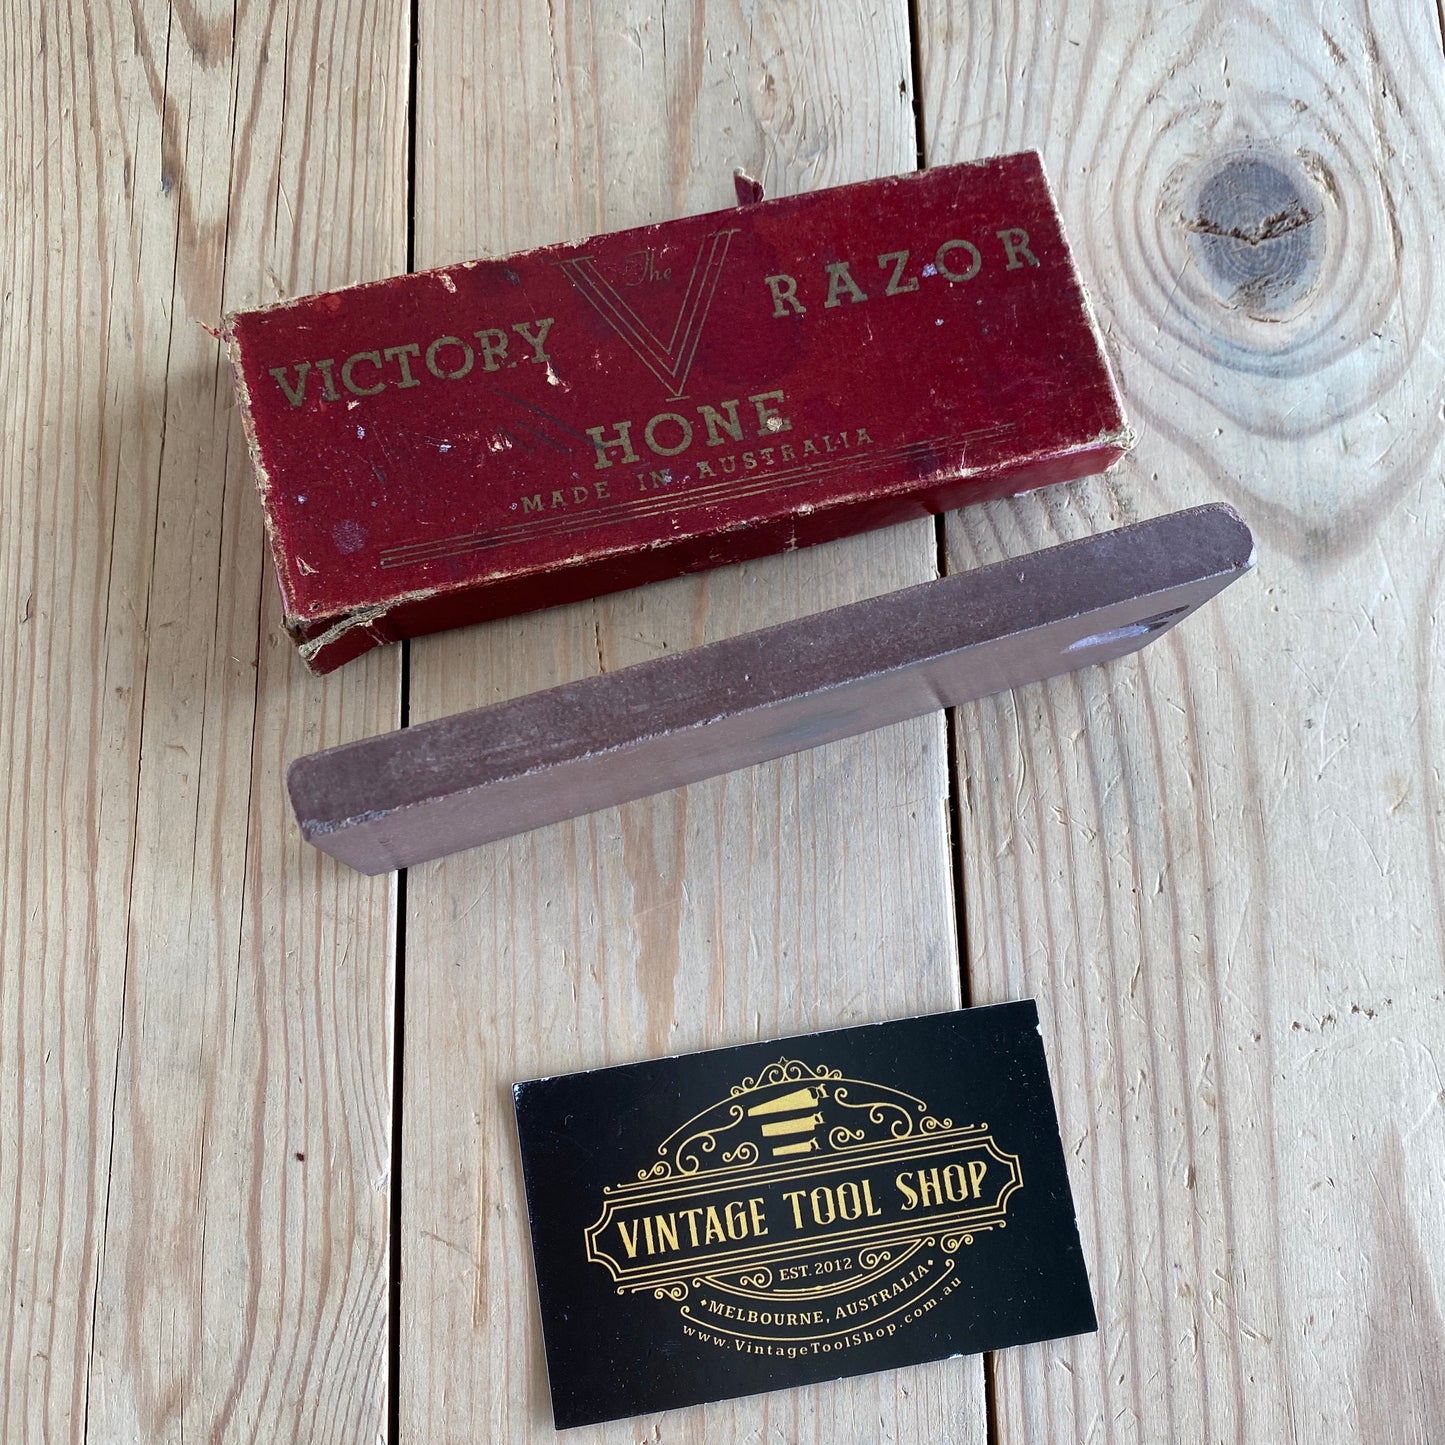 SOLD Vintage Australian VICTORY razor BARBER HONE A73